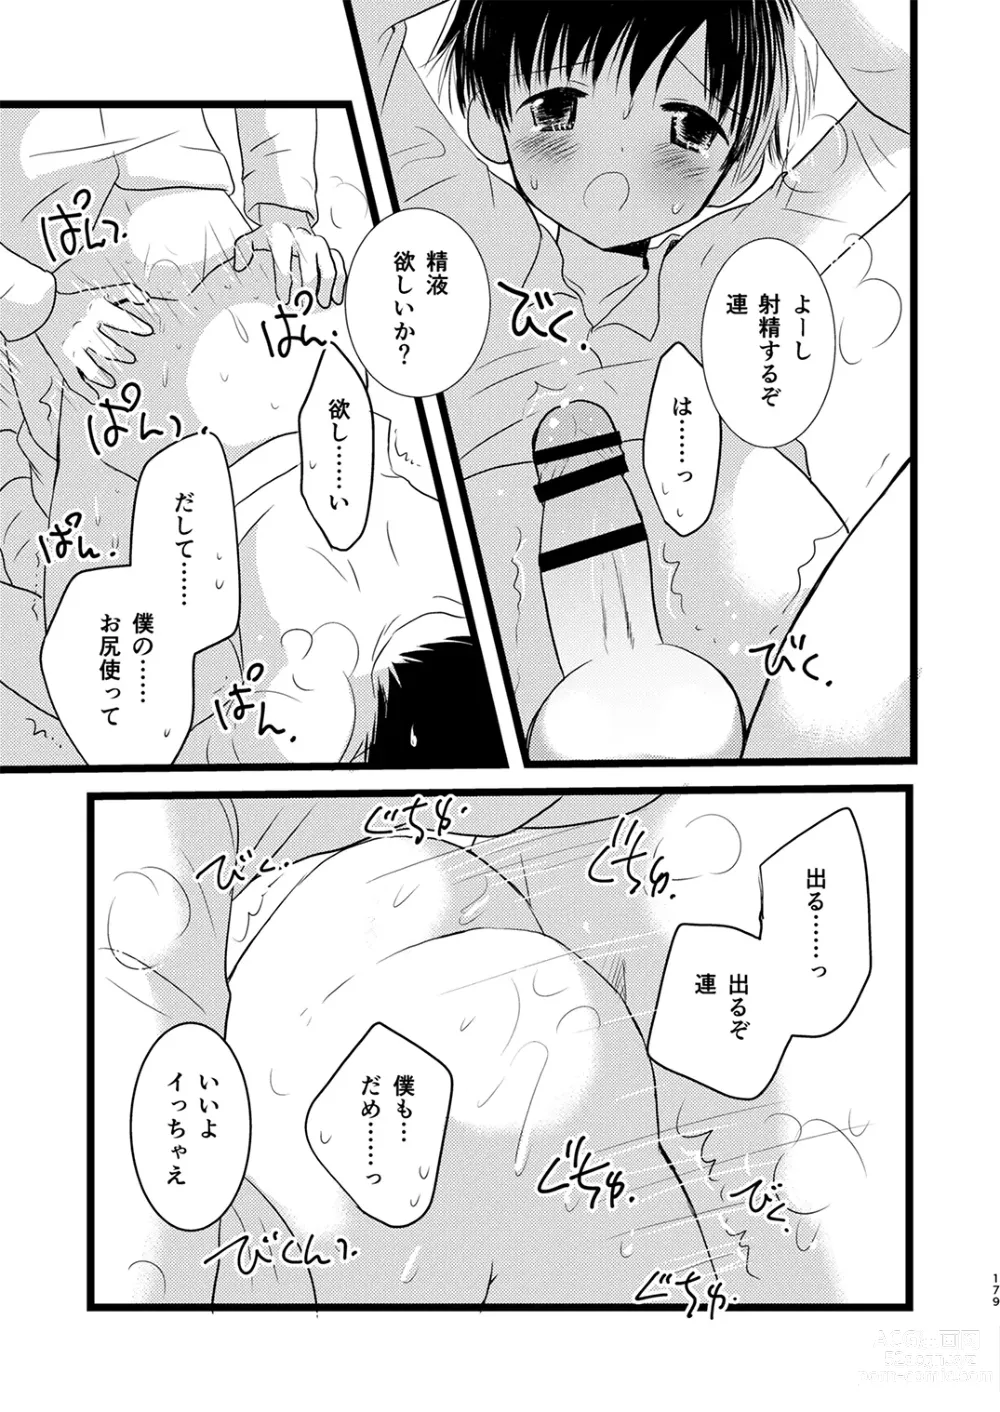 Page 178 of manga Juvenile 2023-12